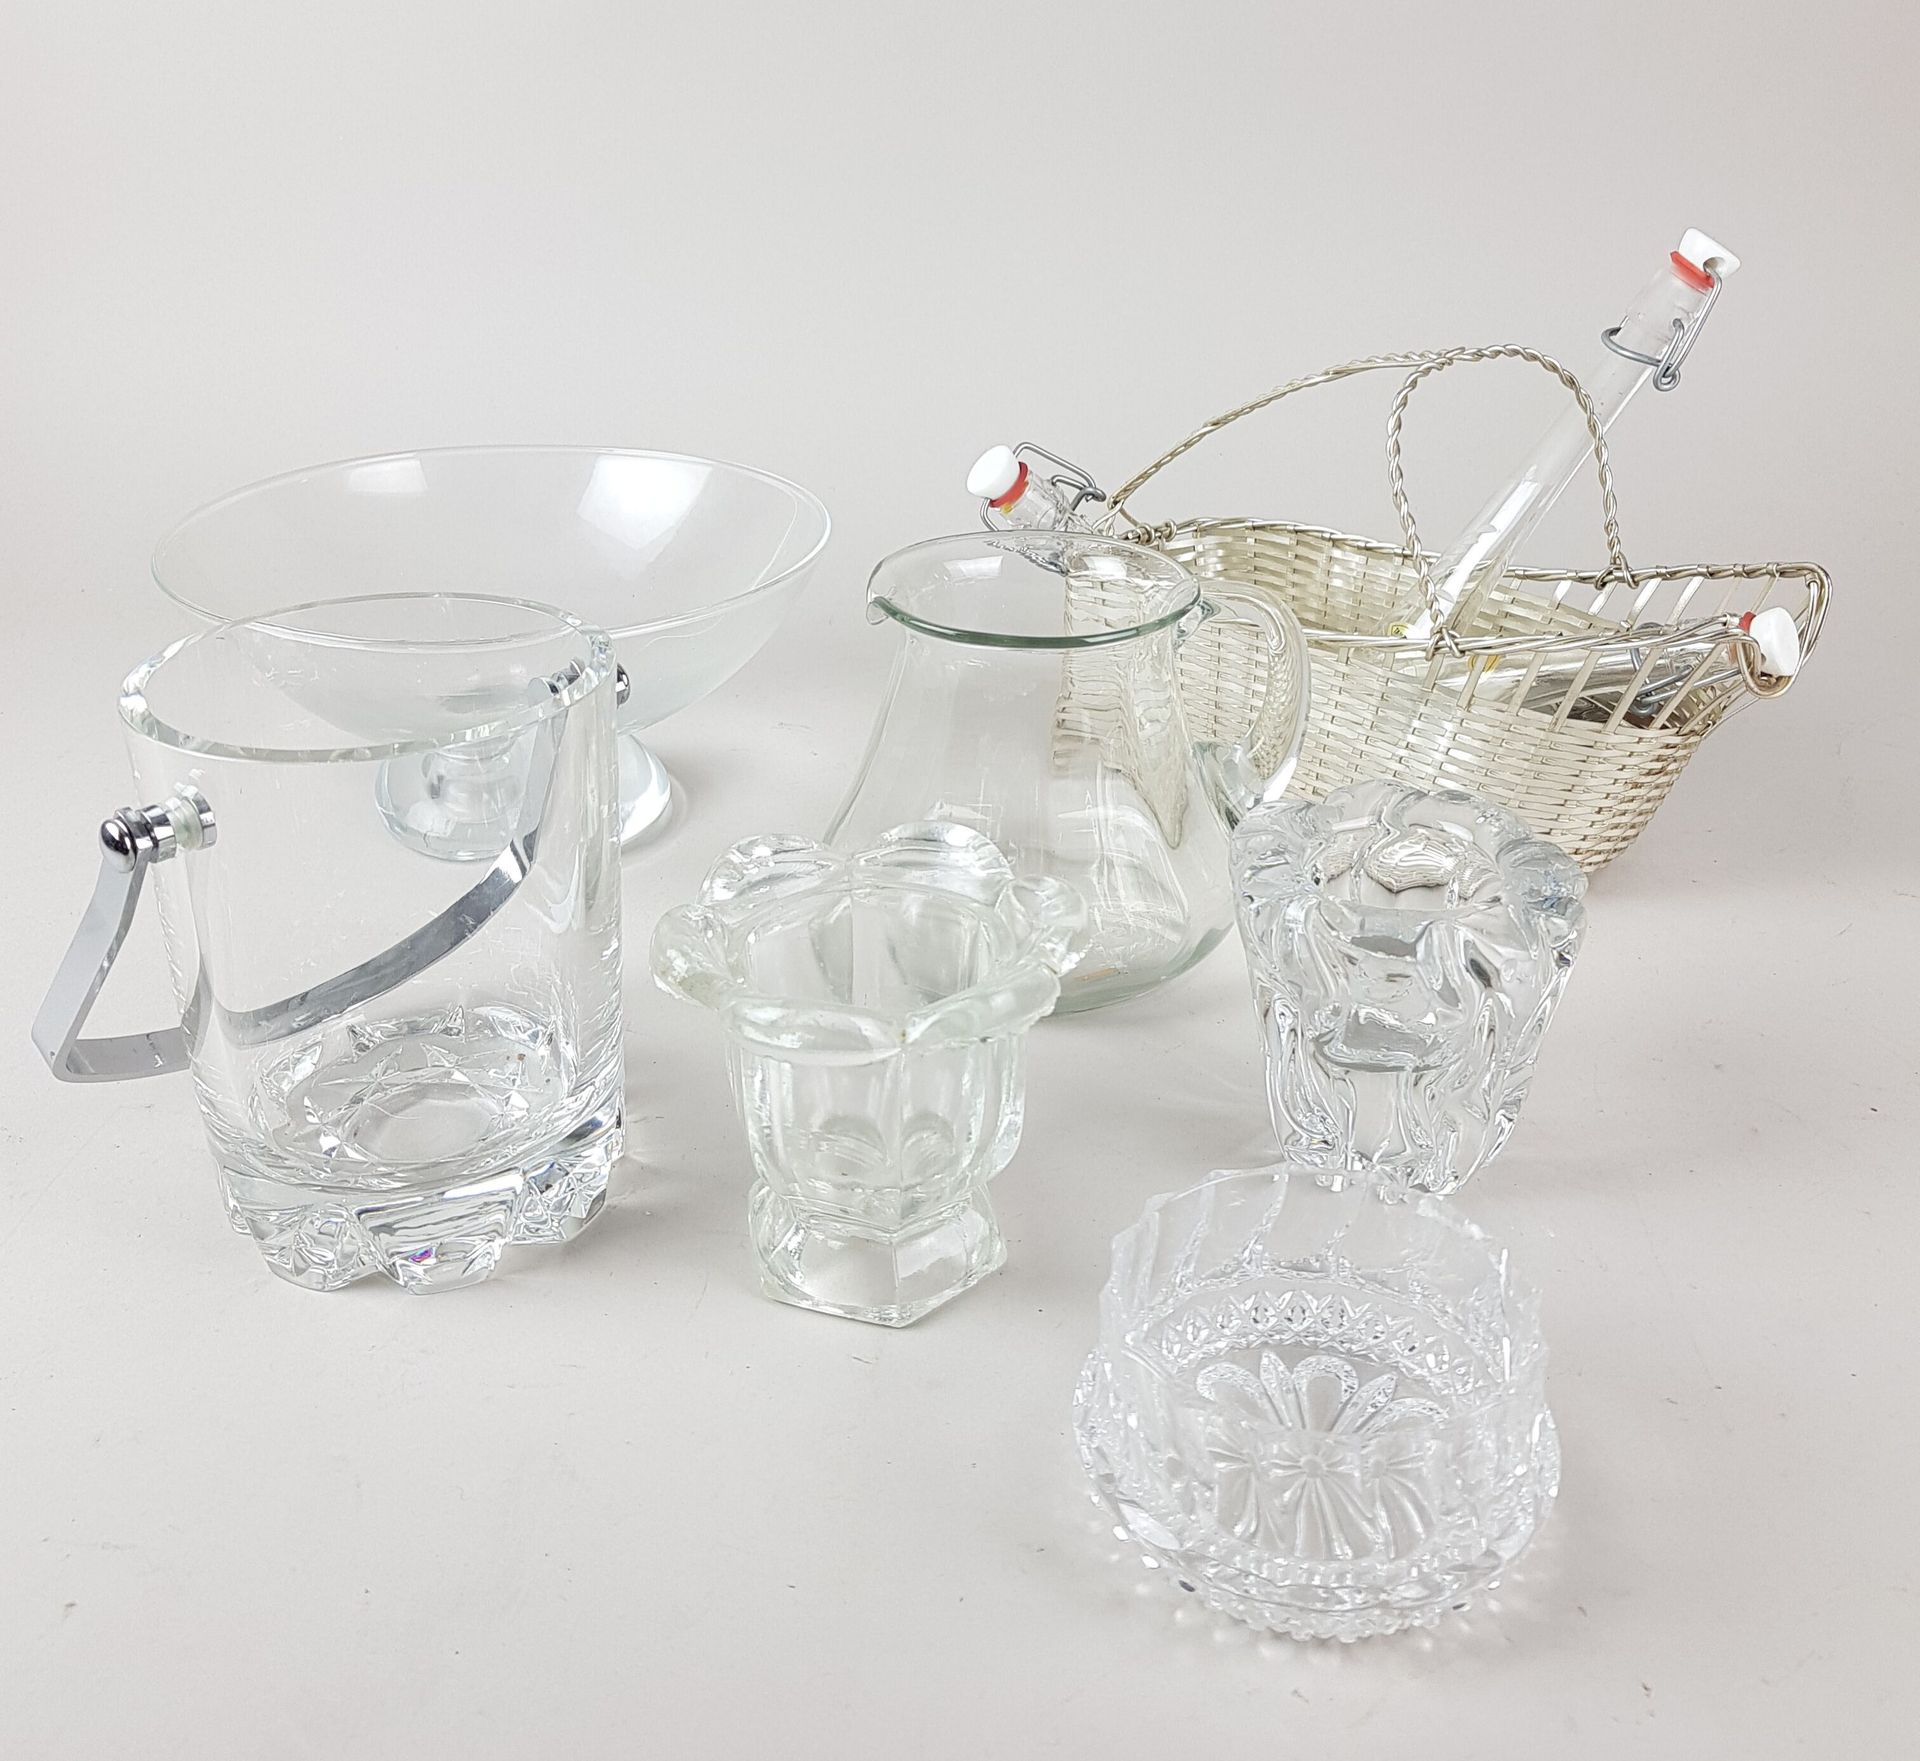 Null 一批玻璃器皿，包括冰桶，杯子，壶，金属篮子 - 磨损和撕裂